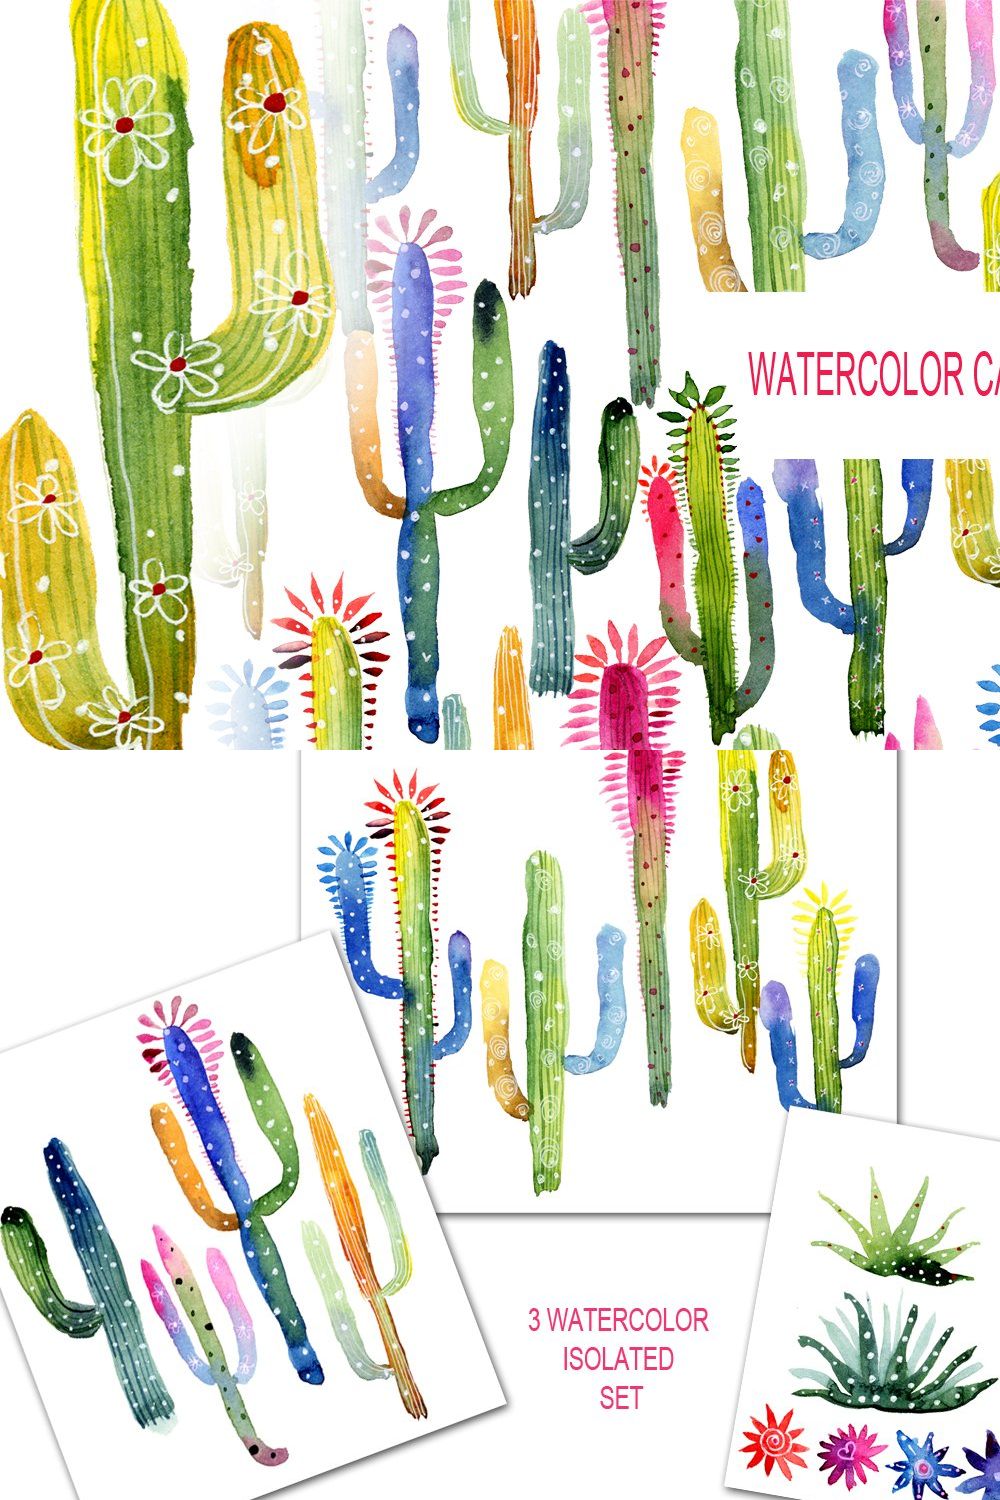 Watercolor Cactus kit pinterest preview image.